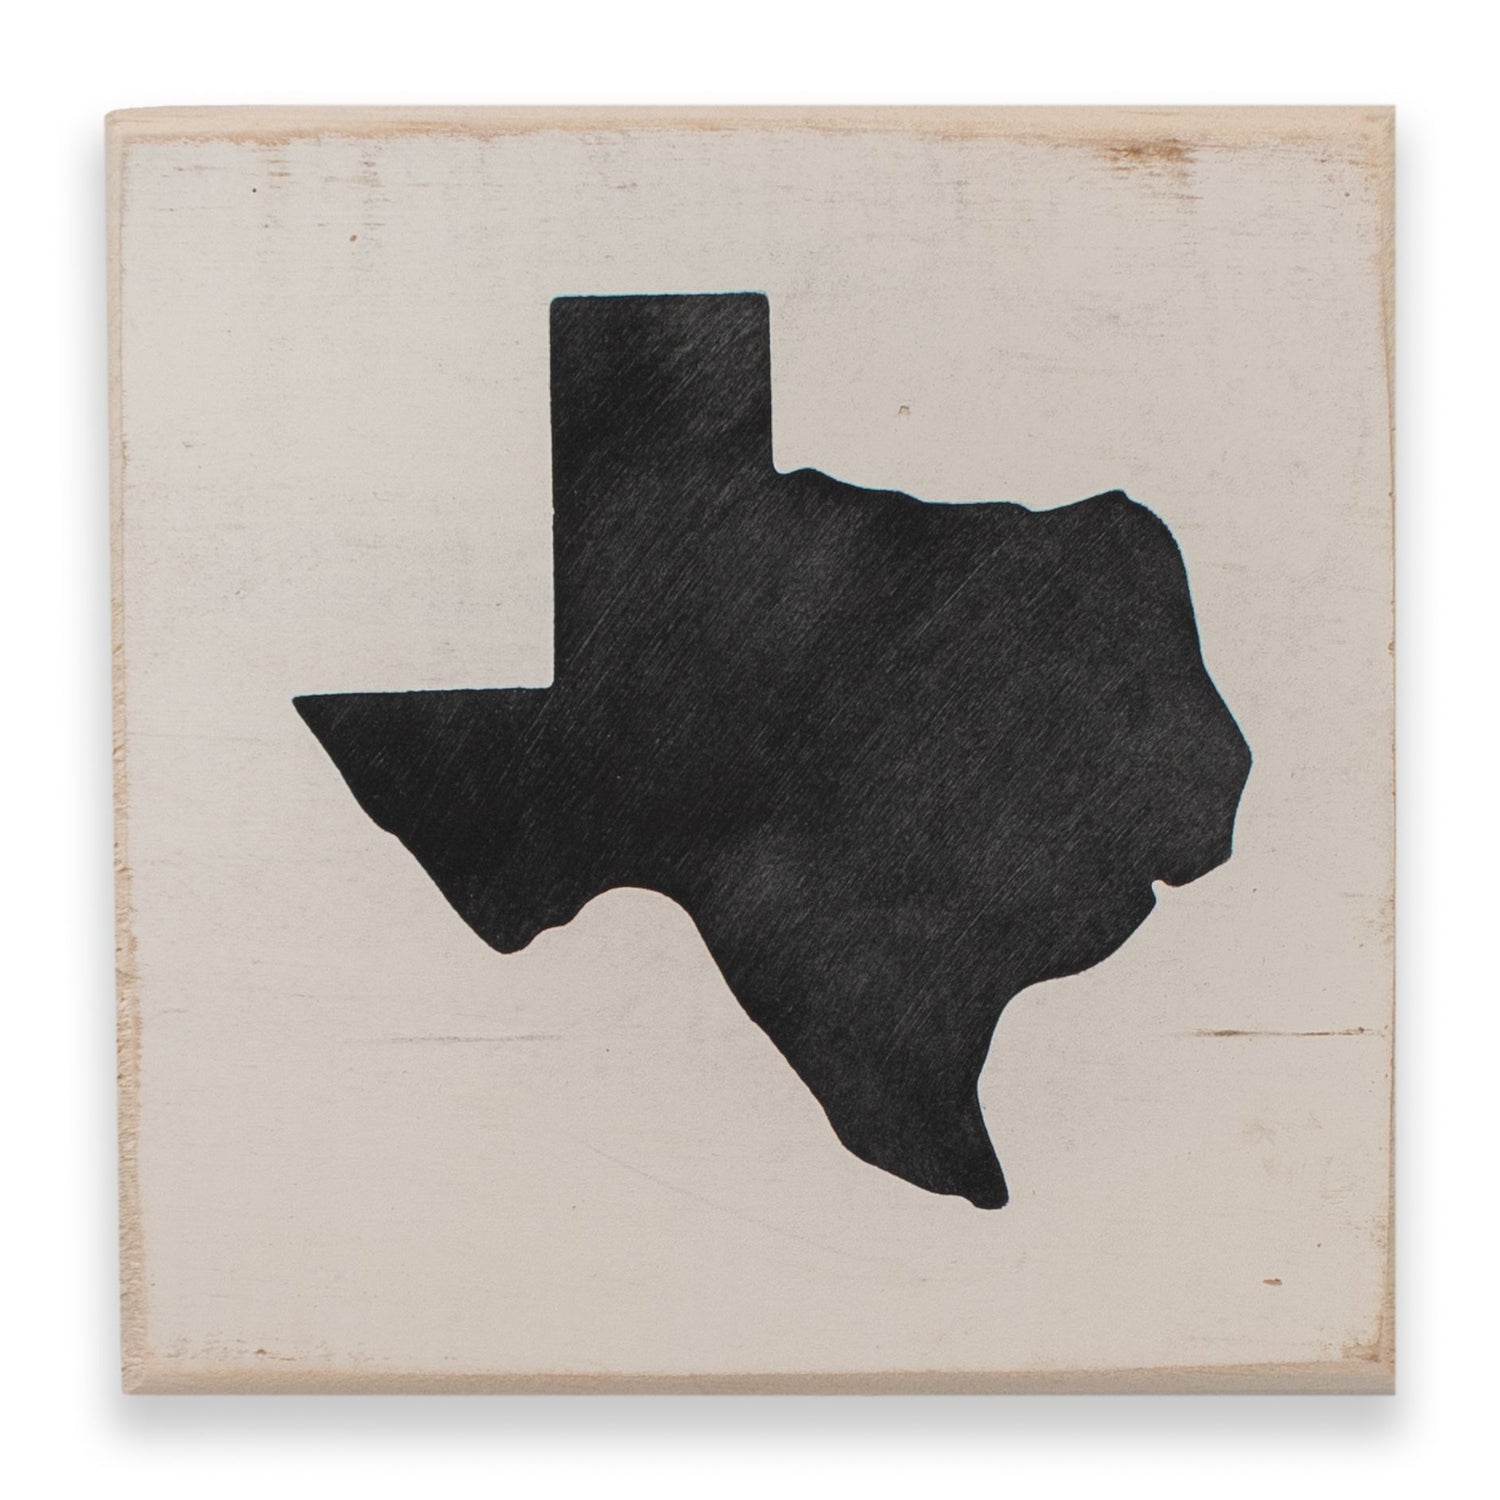 Texas Scrabble Letter